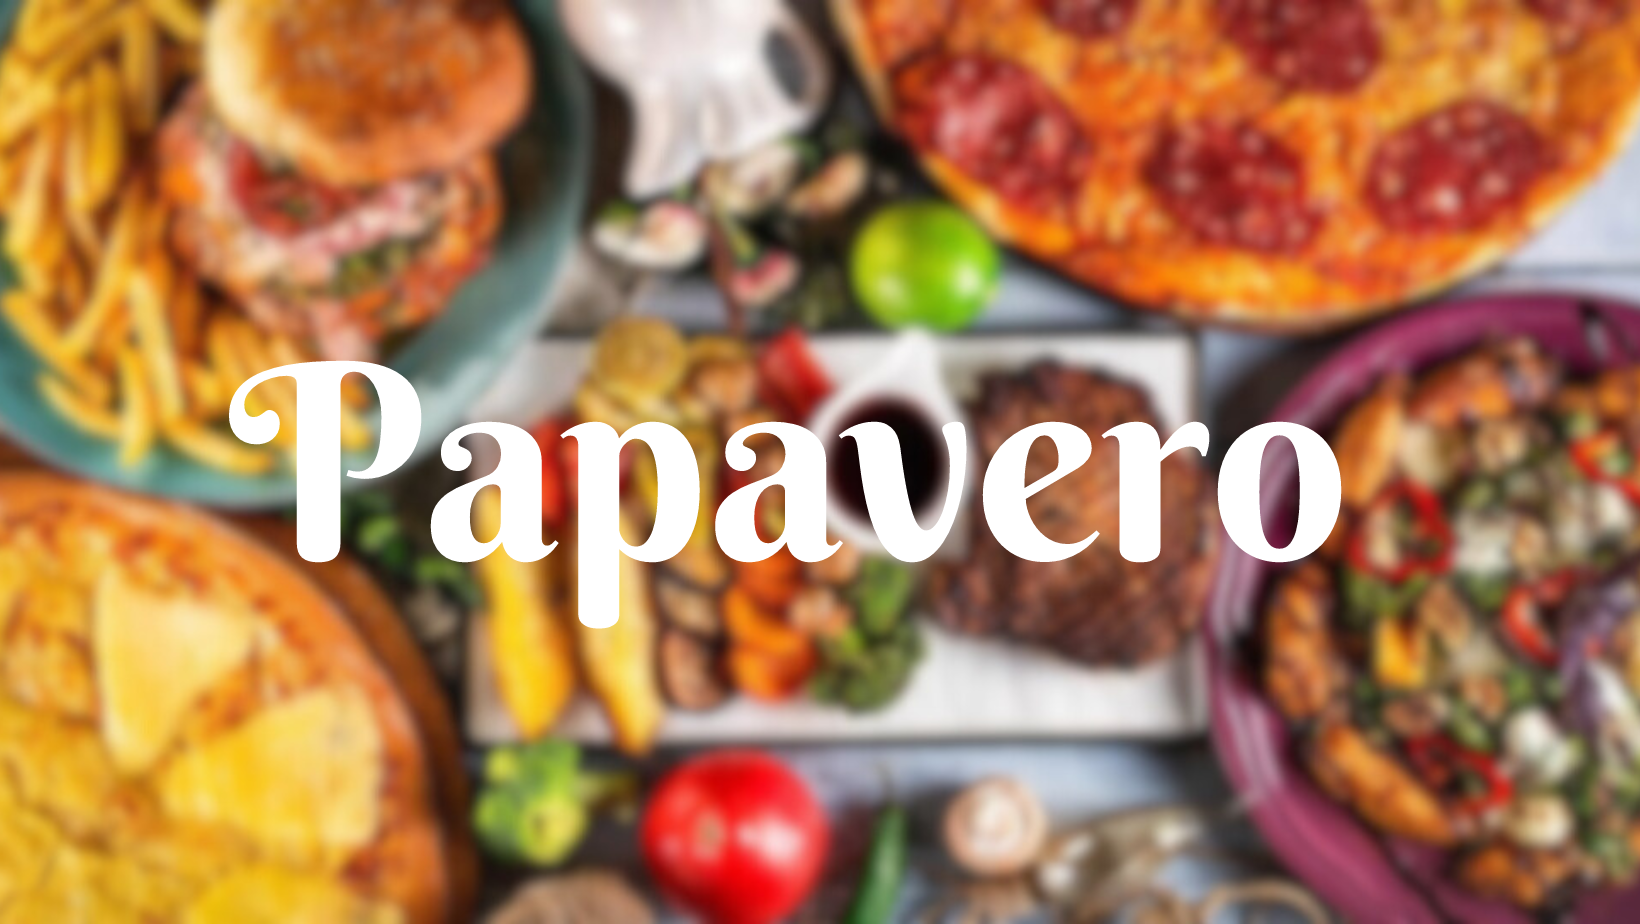 Bar-Restaurant Papavero